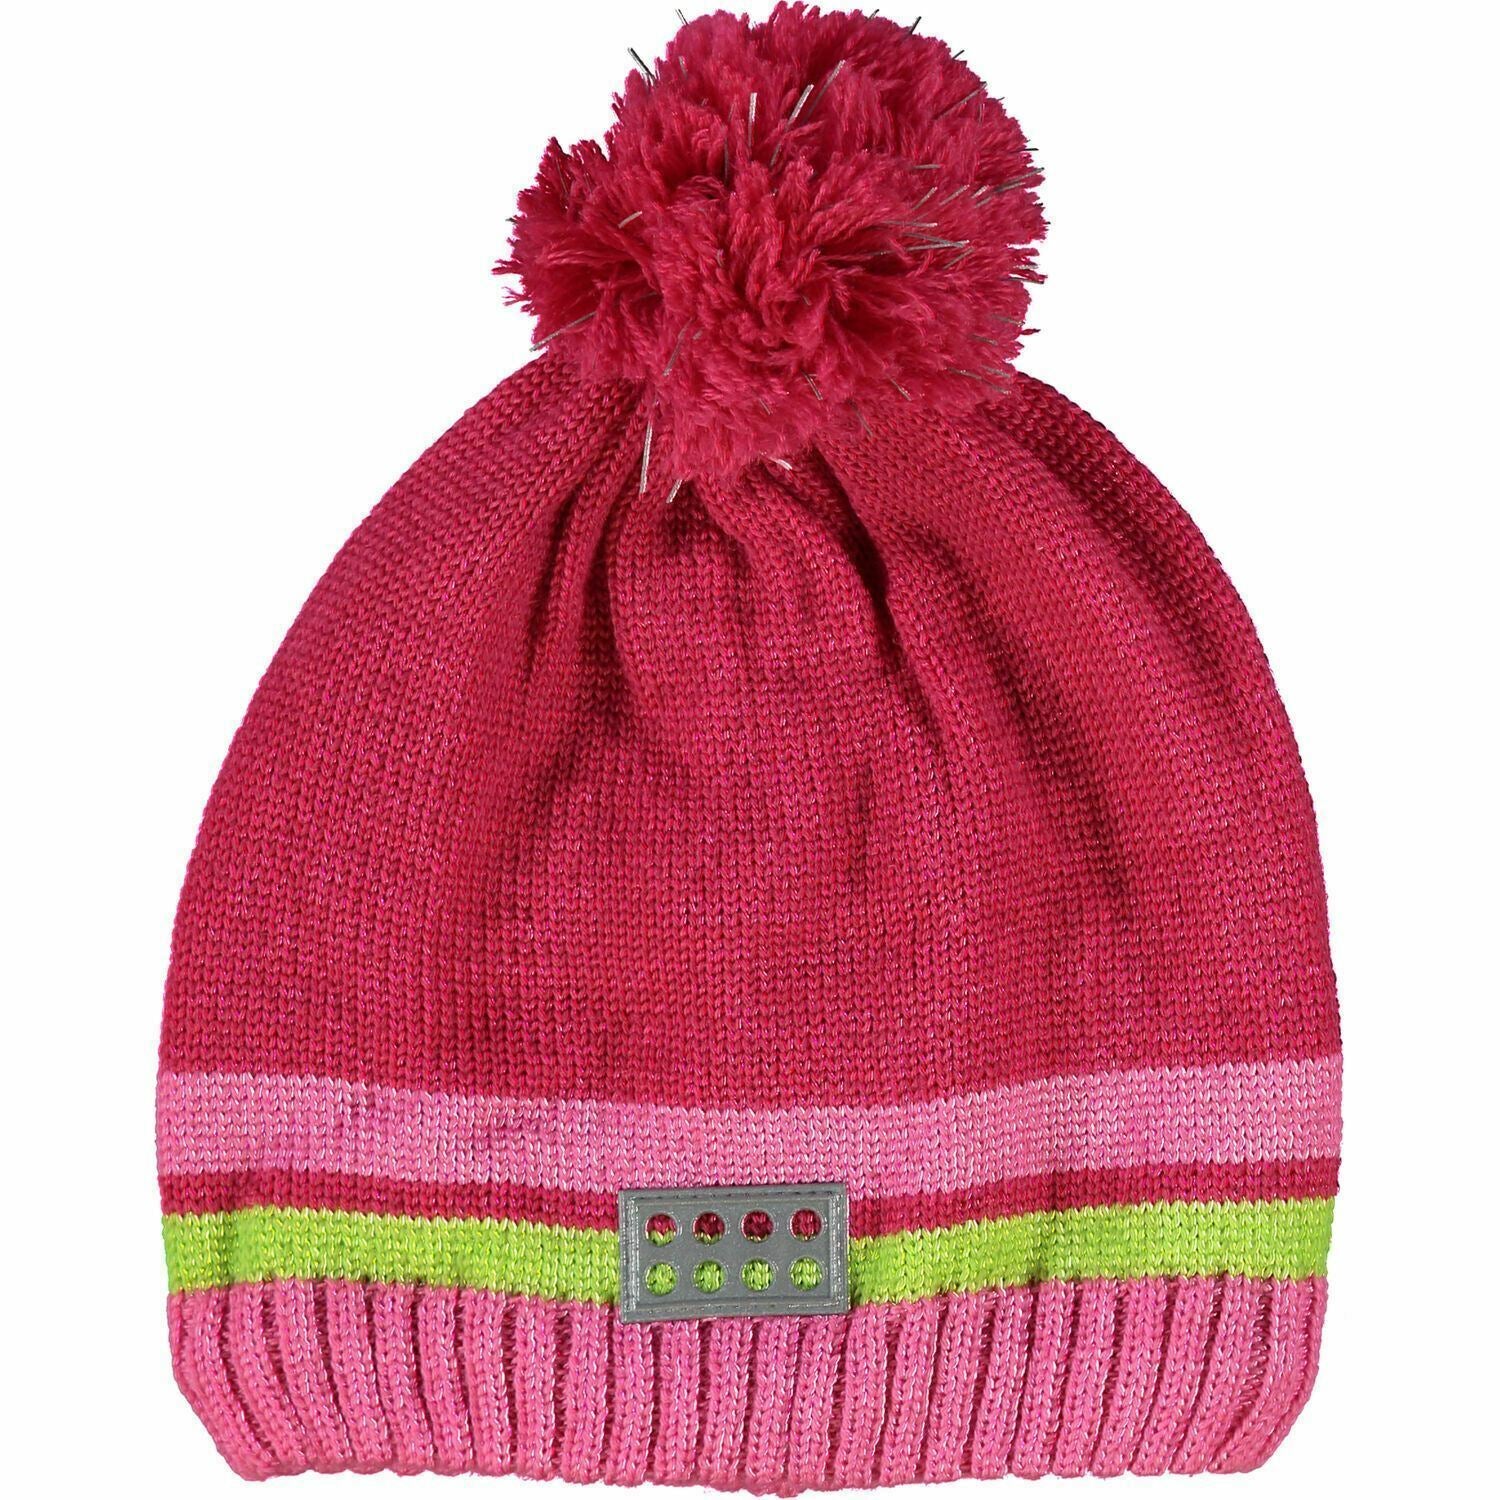 LEGOWEAR Baby Girls' Pink Wool Blend Beanie Hat, size 1 year to 1.5 years